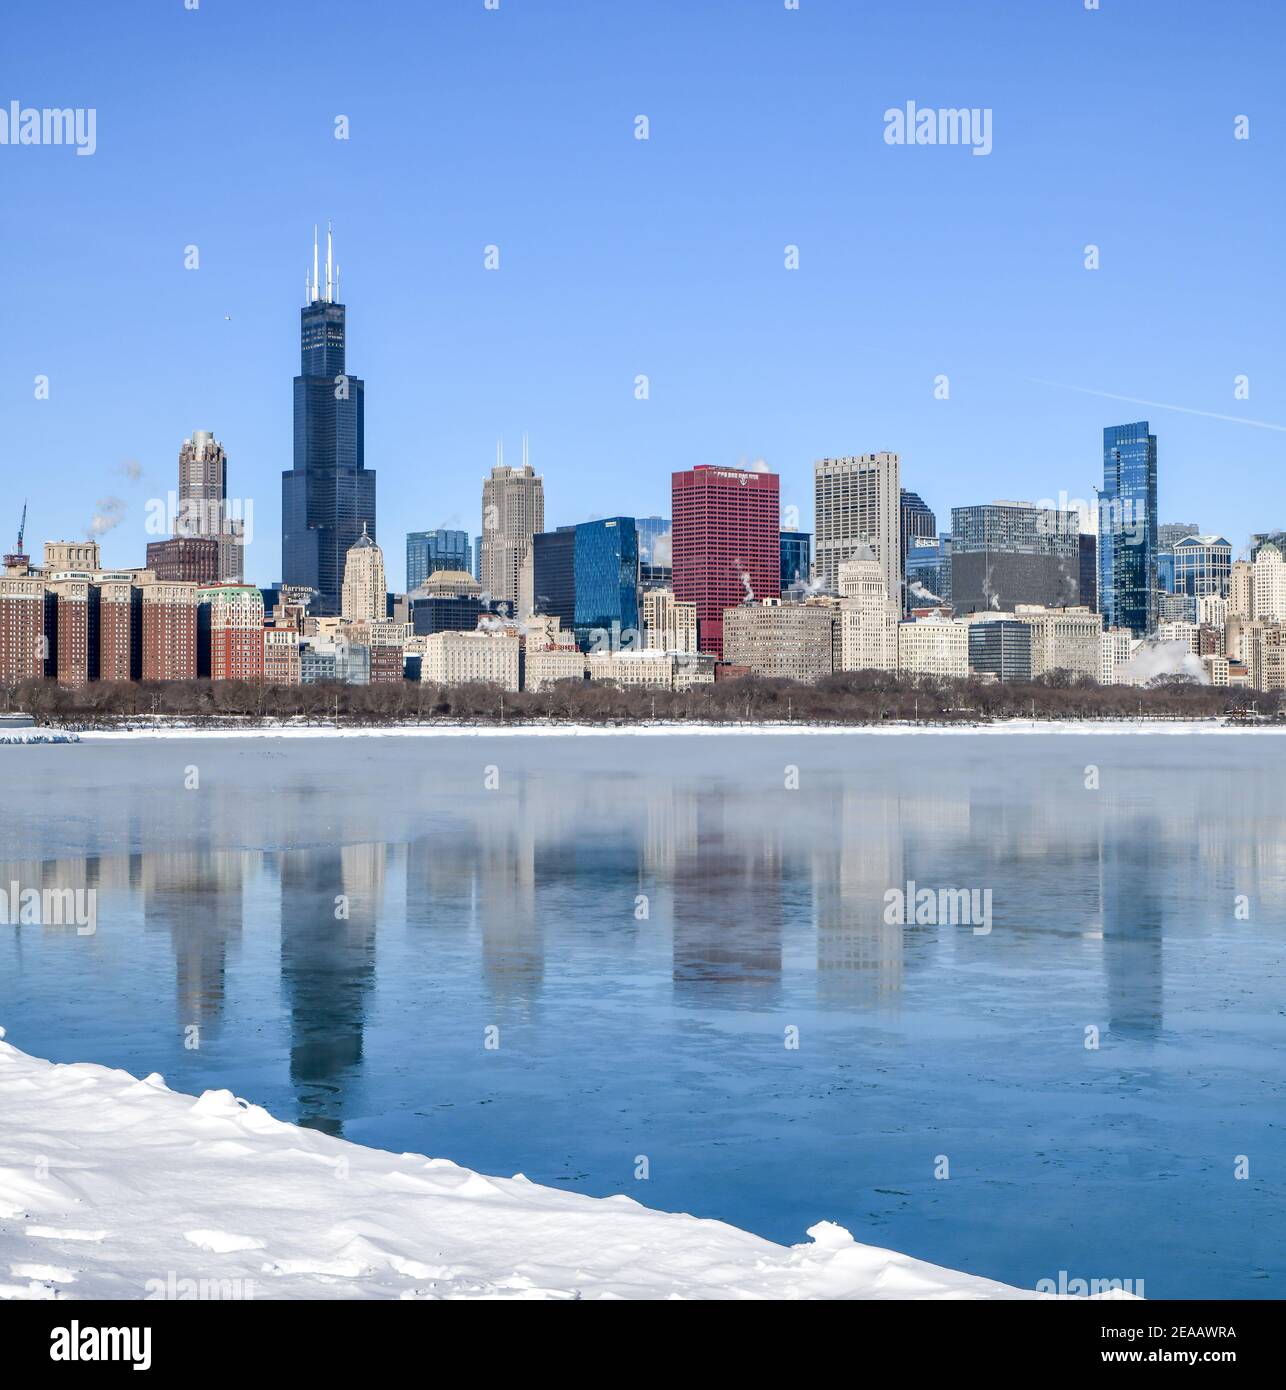 Chicago city skyline along frozen lakeshore in winter Stock Photo - Alamy